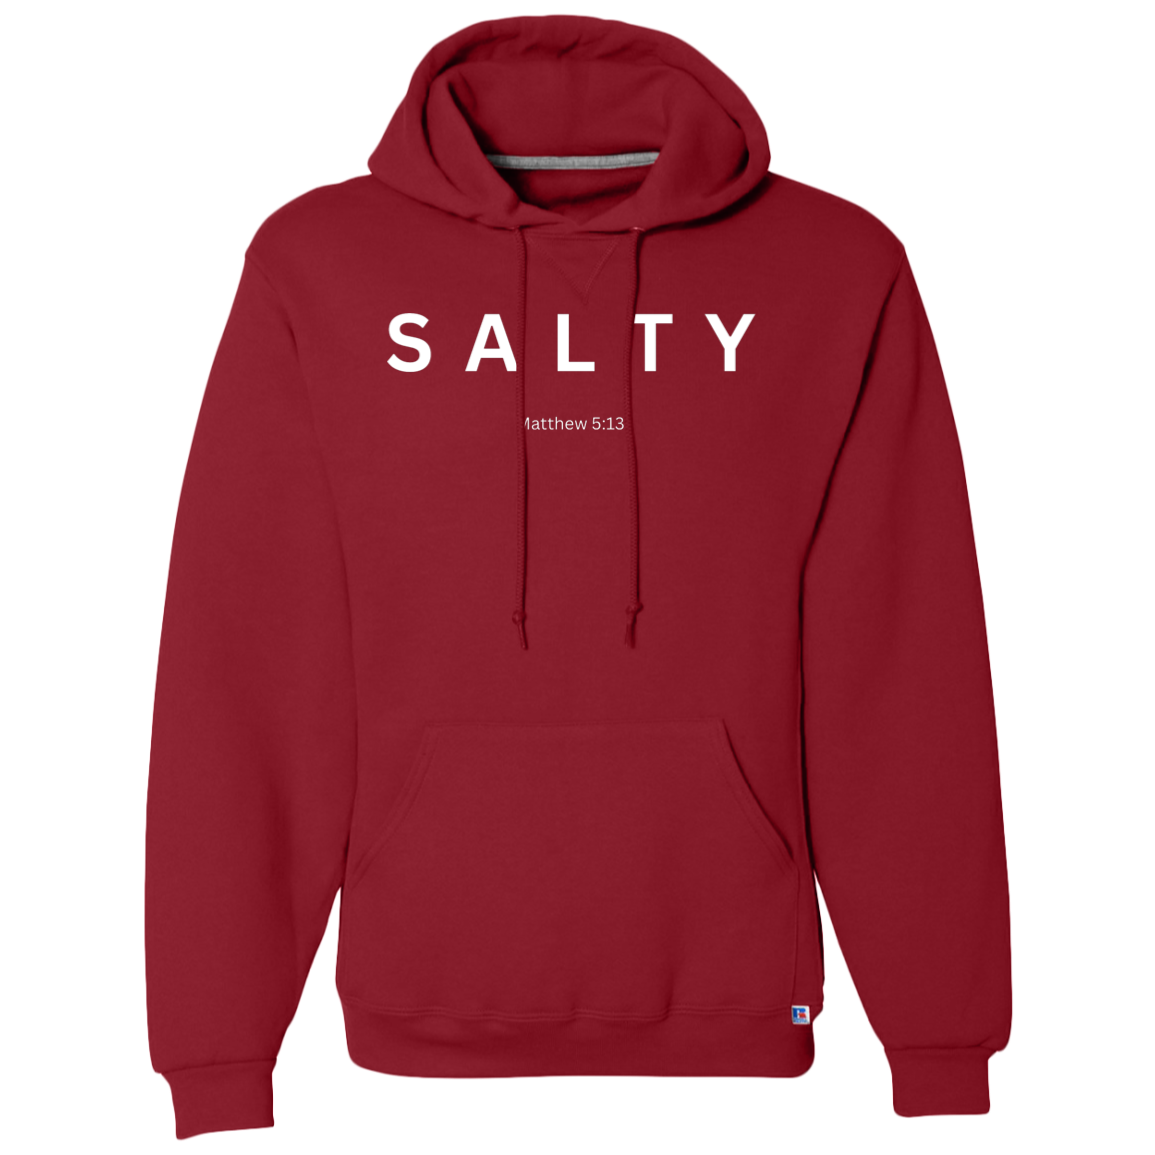 Salty Dri-Power Fleece Pullover Hoodie white lettering